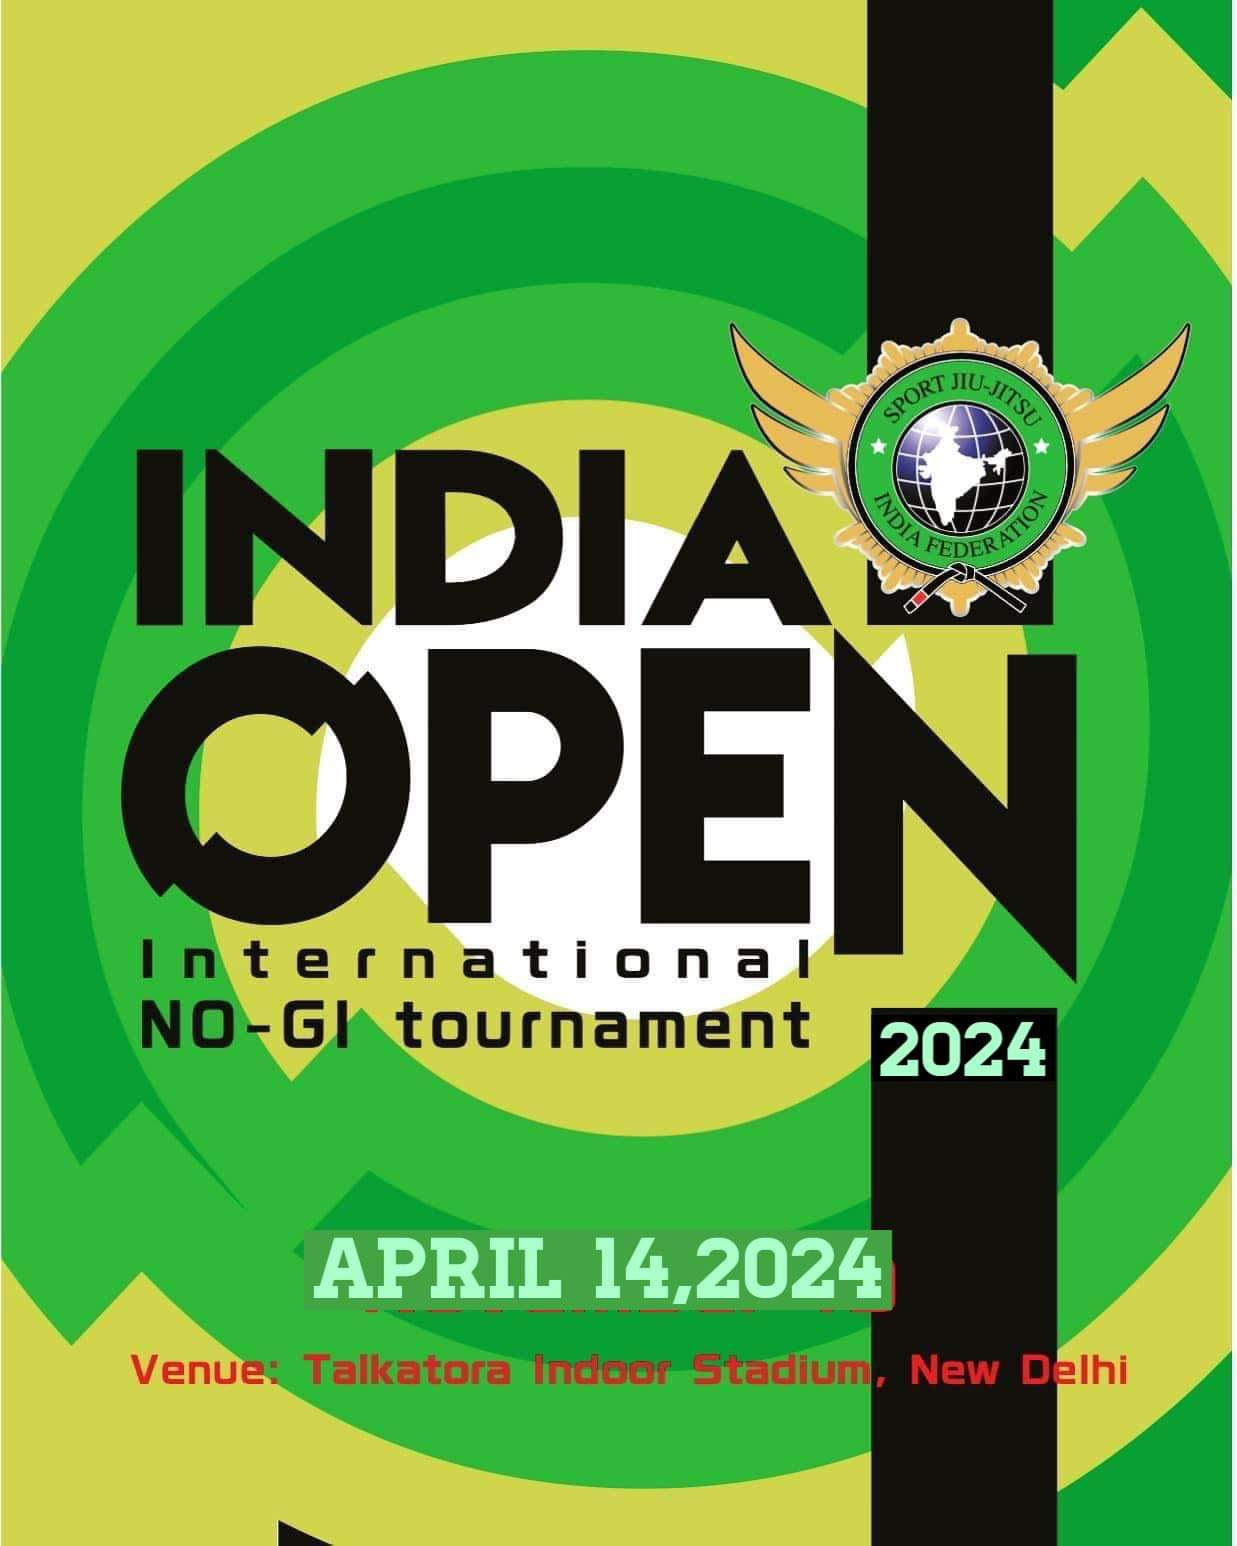 sjjindf india international open no-gi tournament 2024